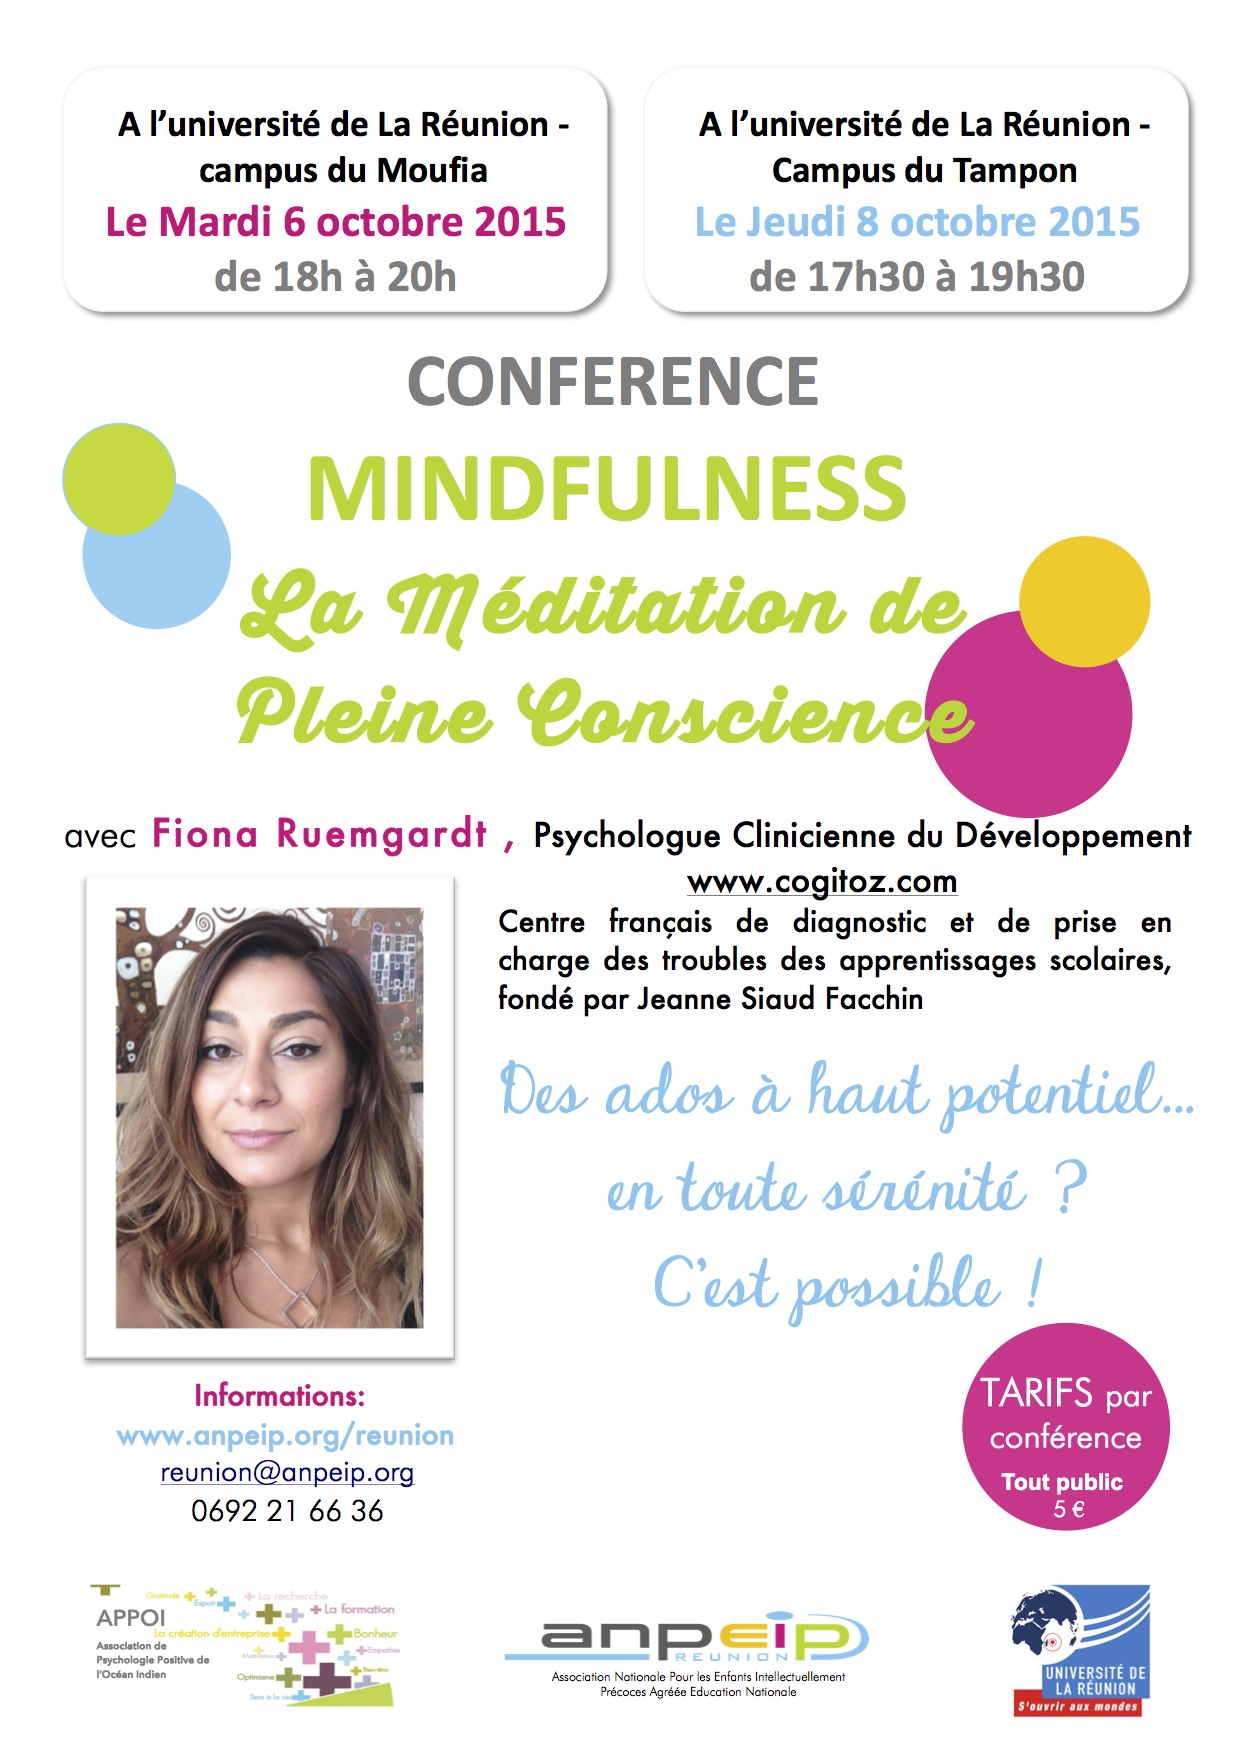 Conférence Mindfulness : "La méditation de pleine conscience"